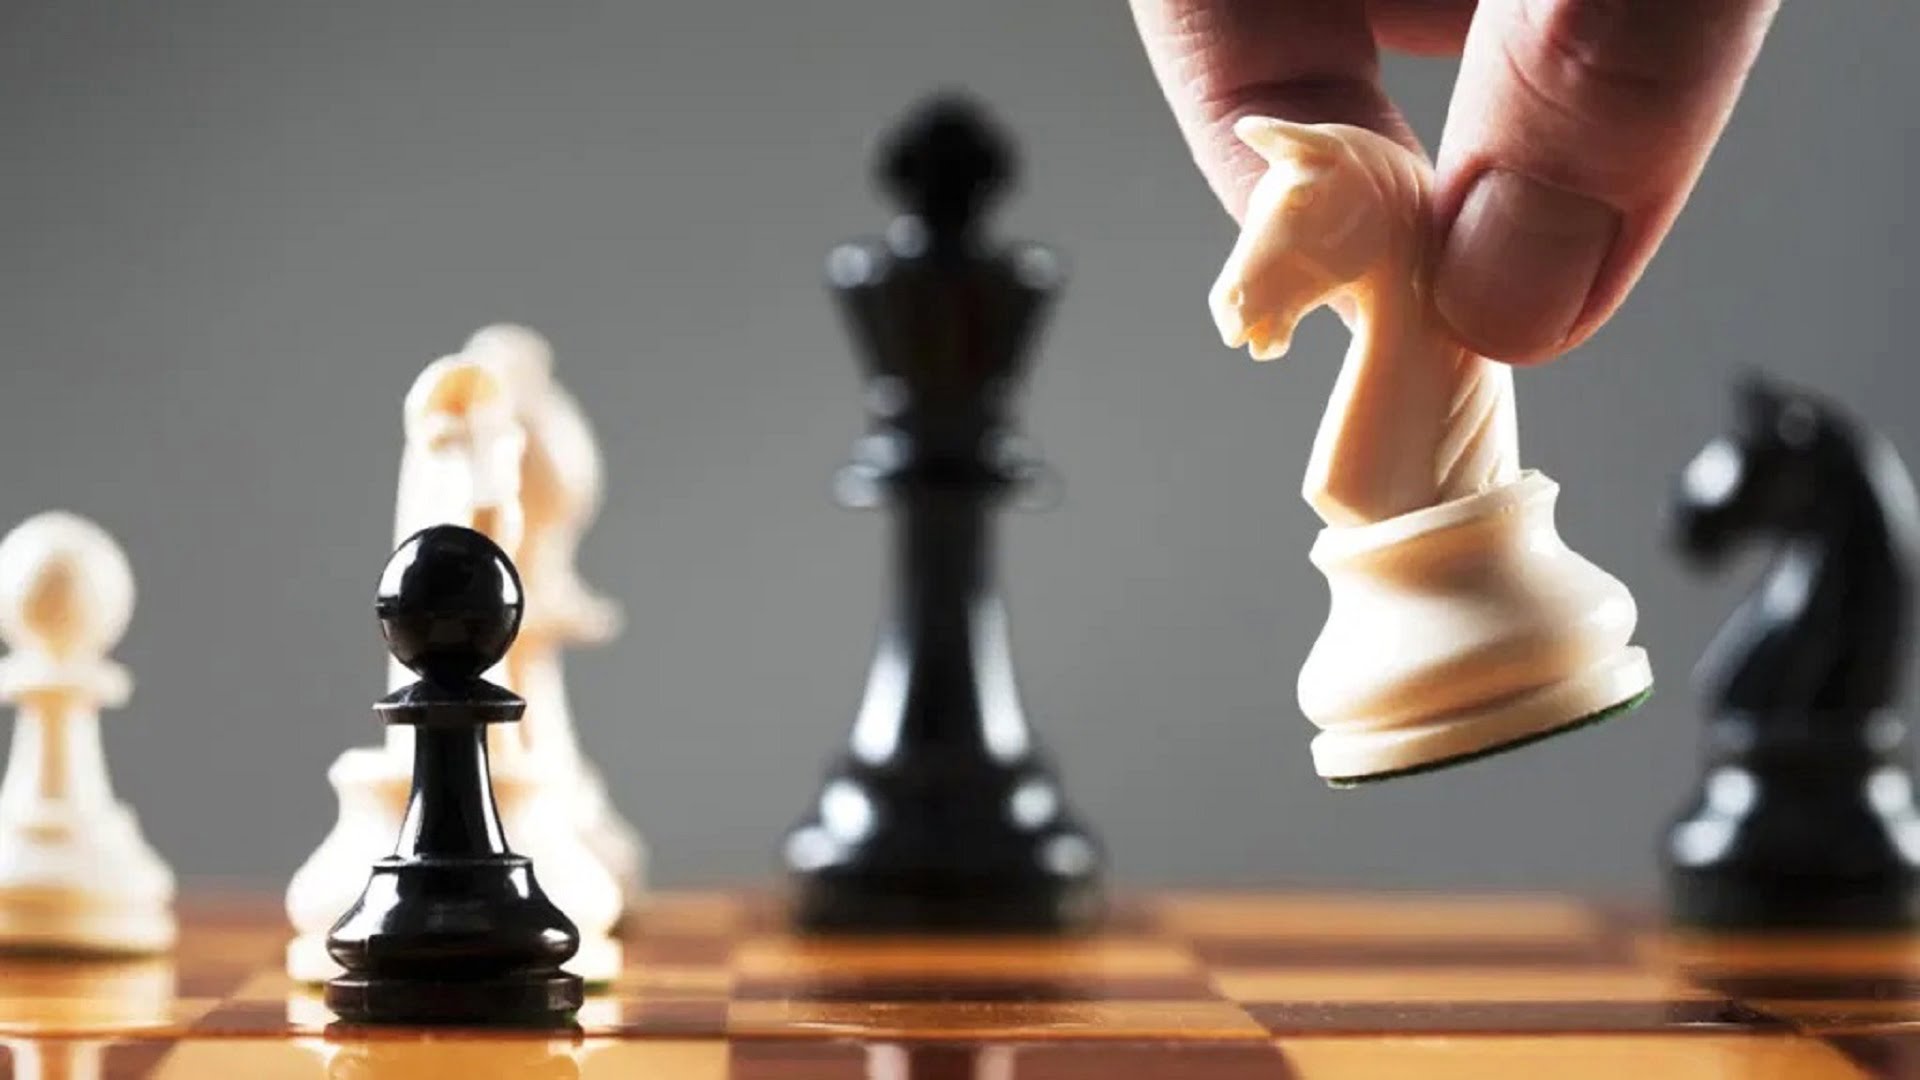 Pawn Endings: Beginner to Expert - Chess Lessons 